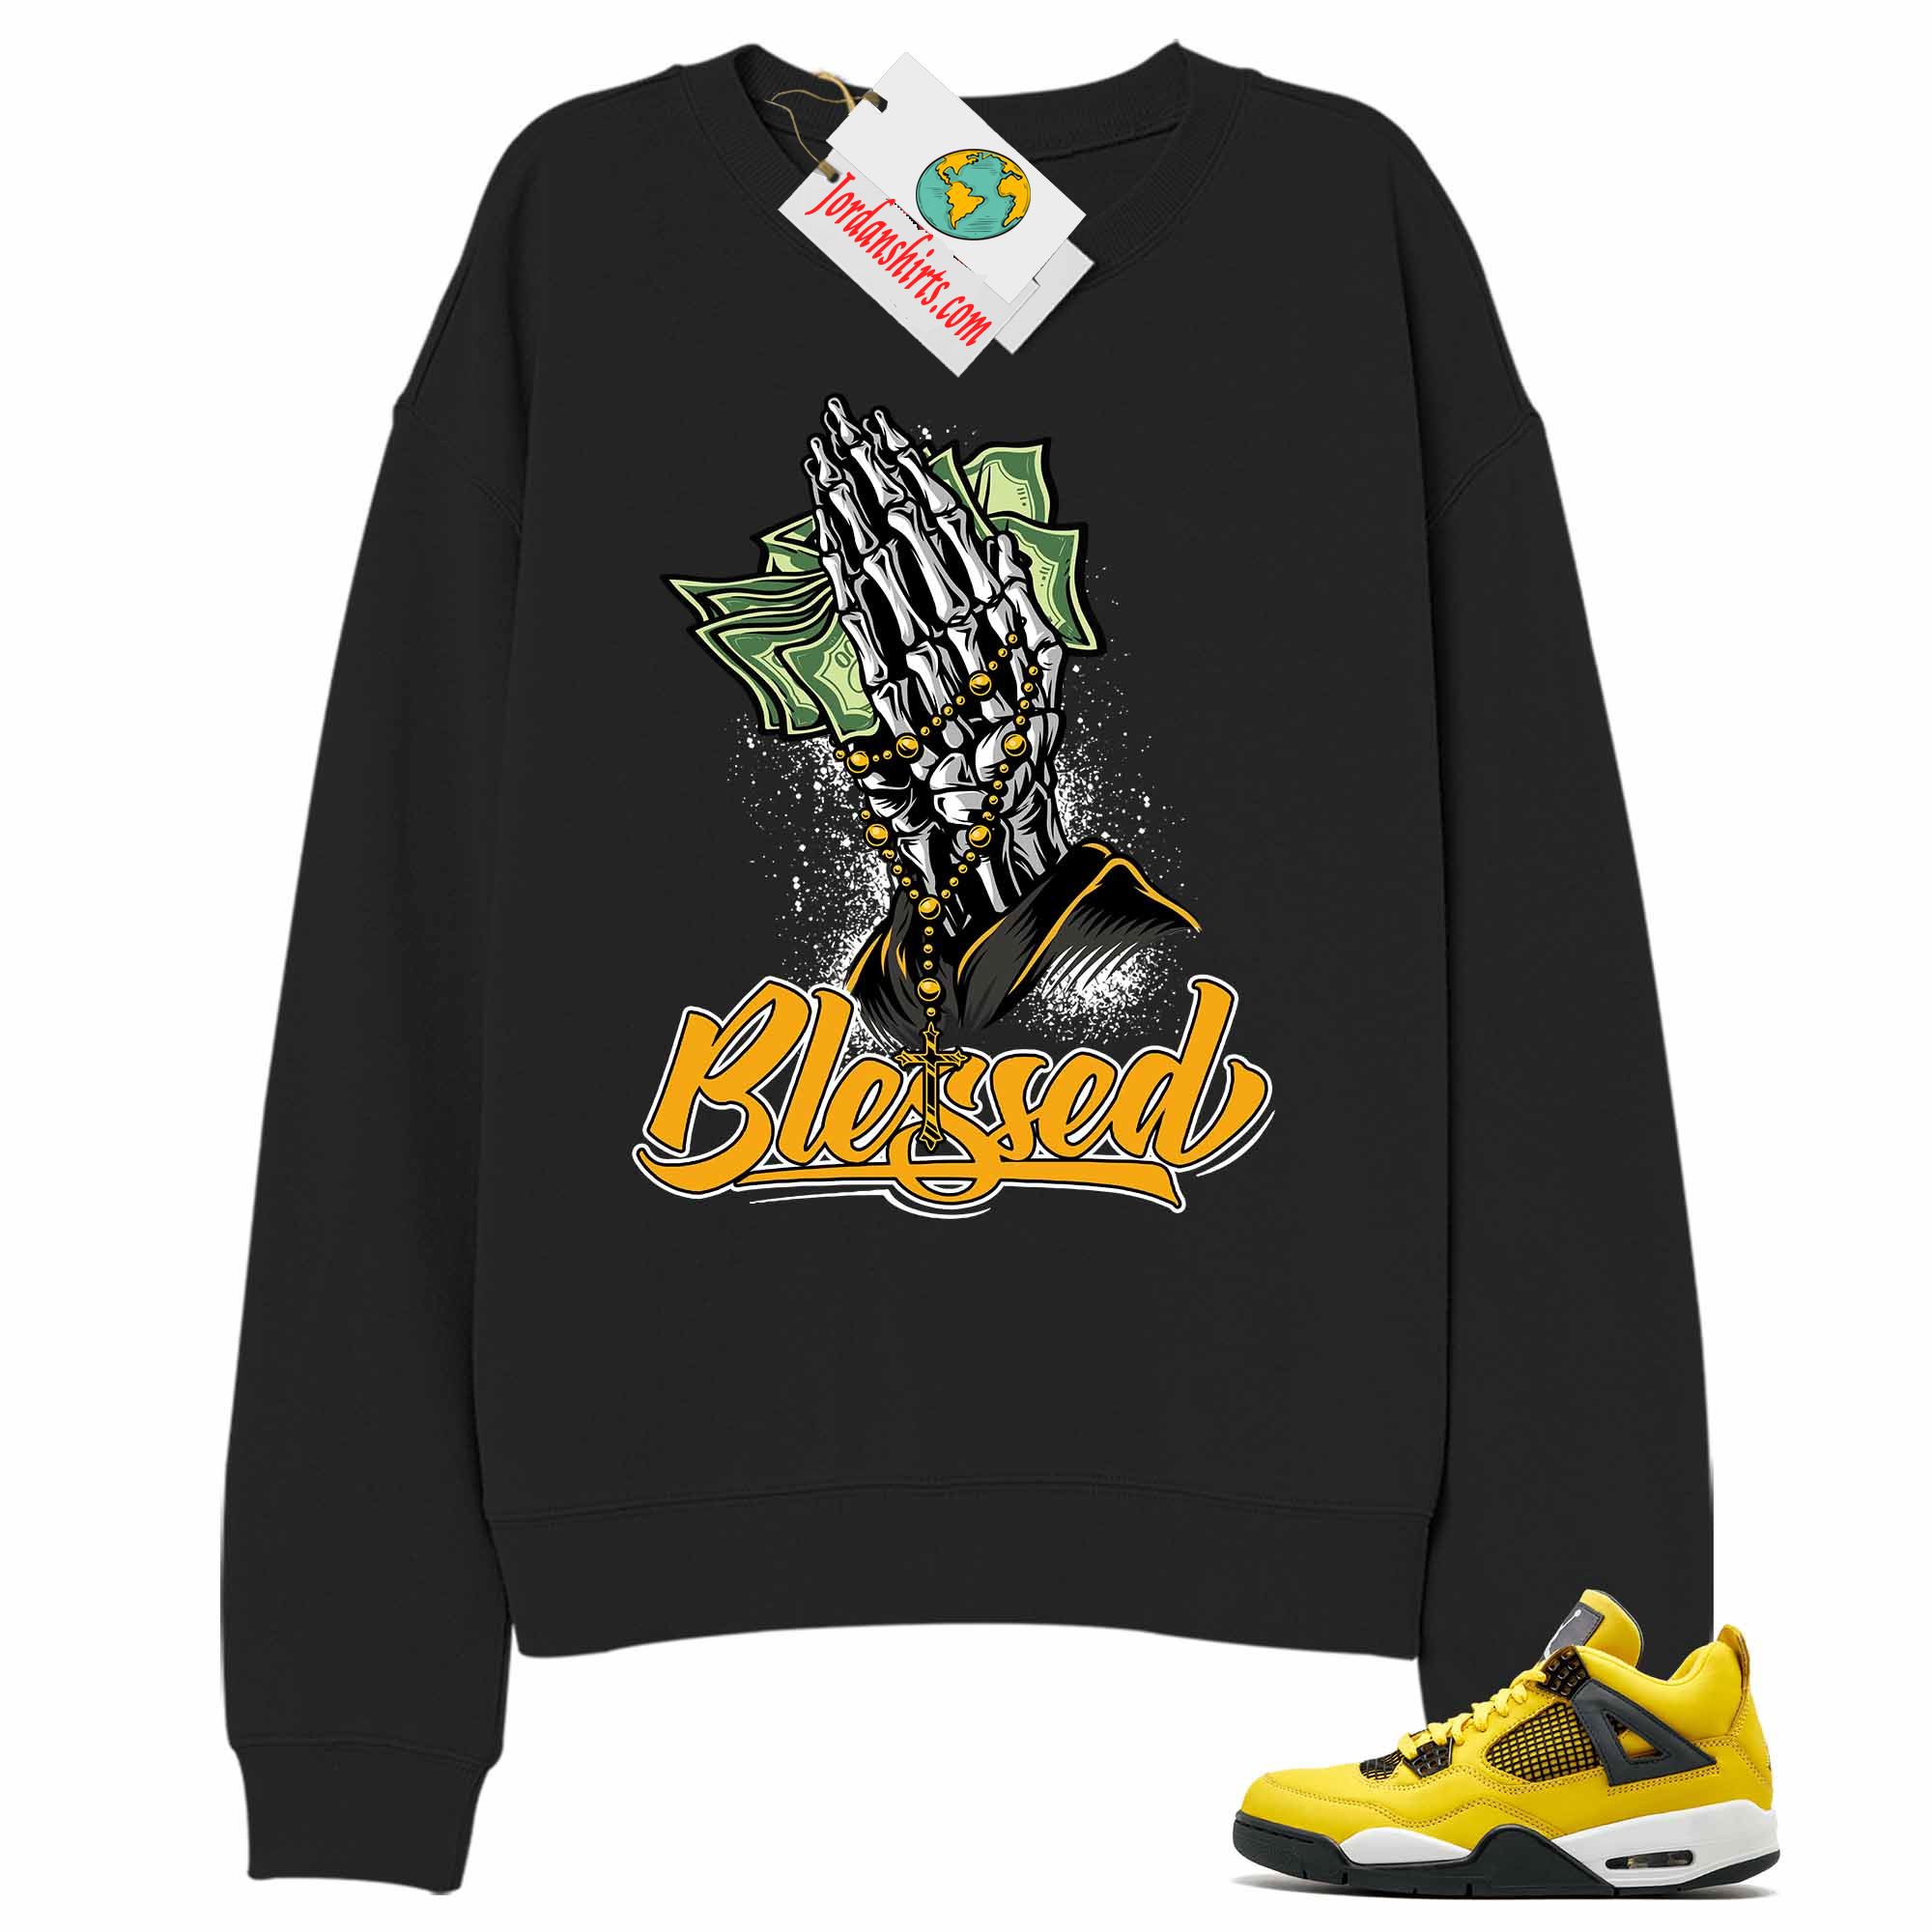 Jordan 4 Sweatshirt, Blessed Pray Hand Money Black Sweatshirt Air Jordan 4 Tour Yellow Lightning 4s Size Up To 5xl